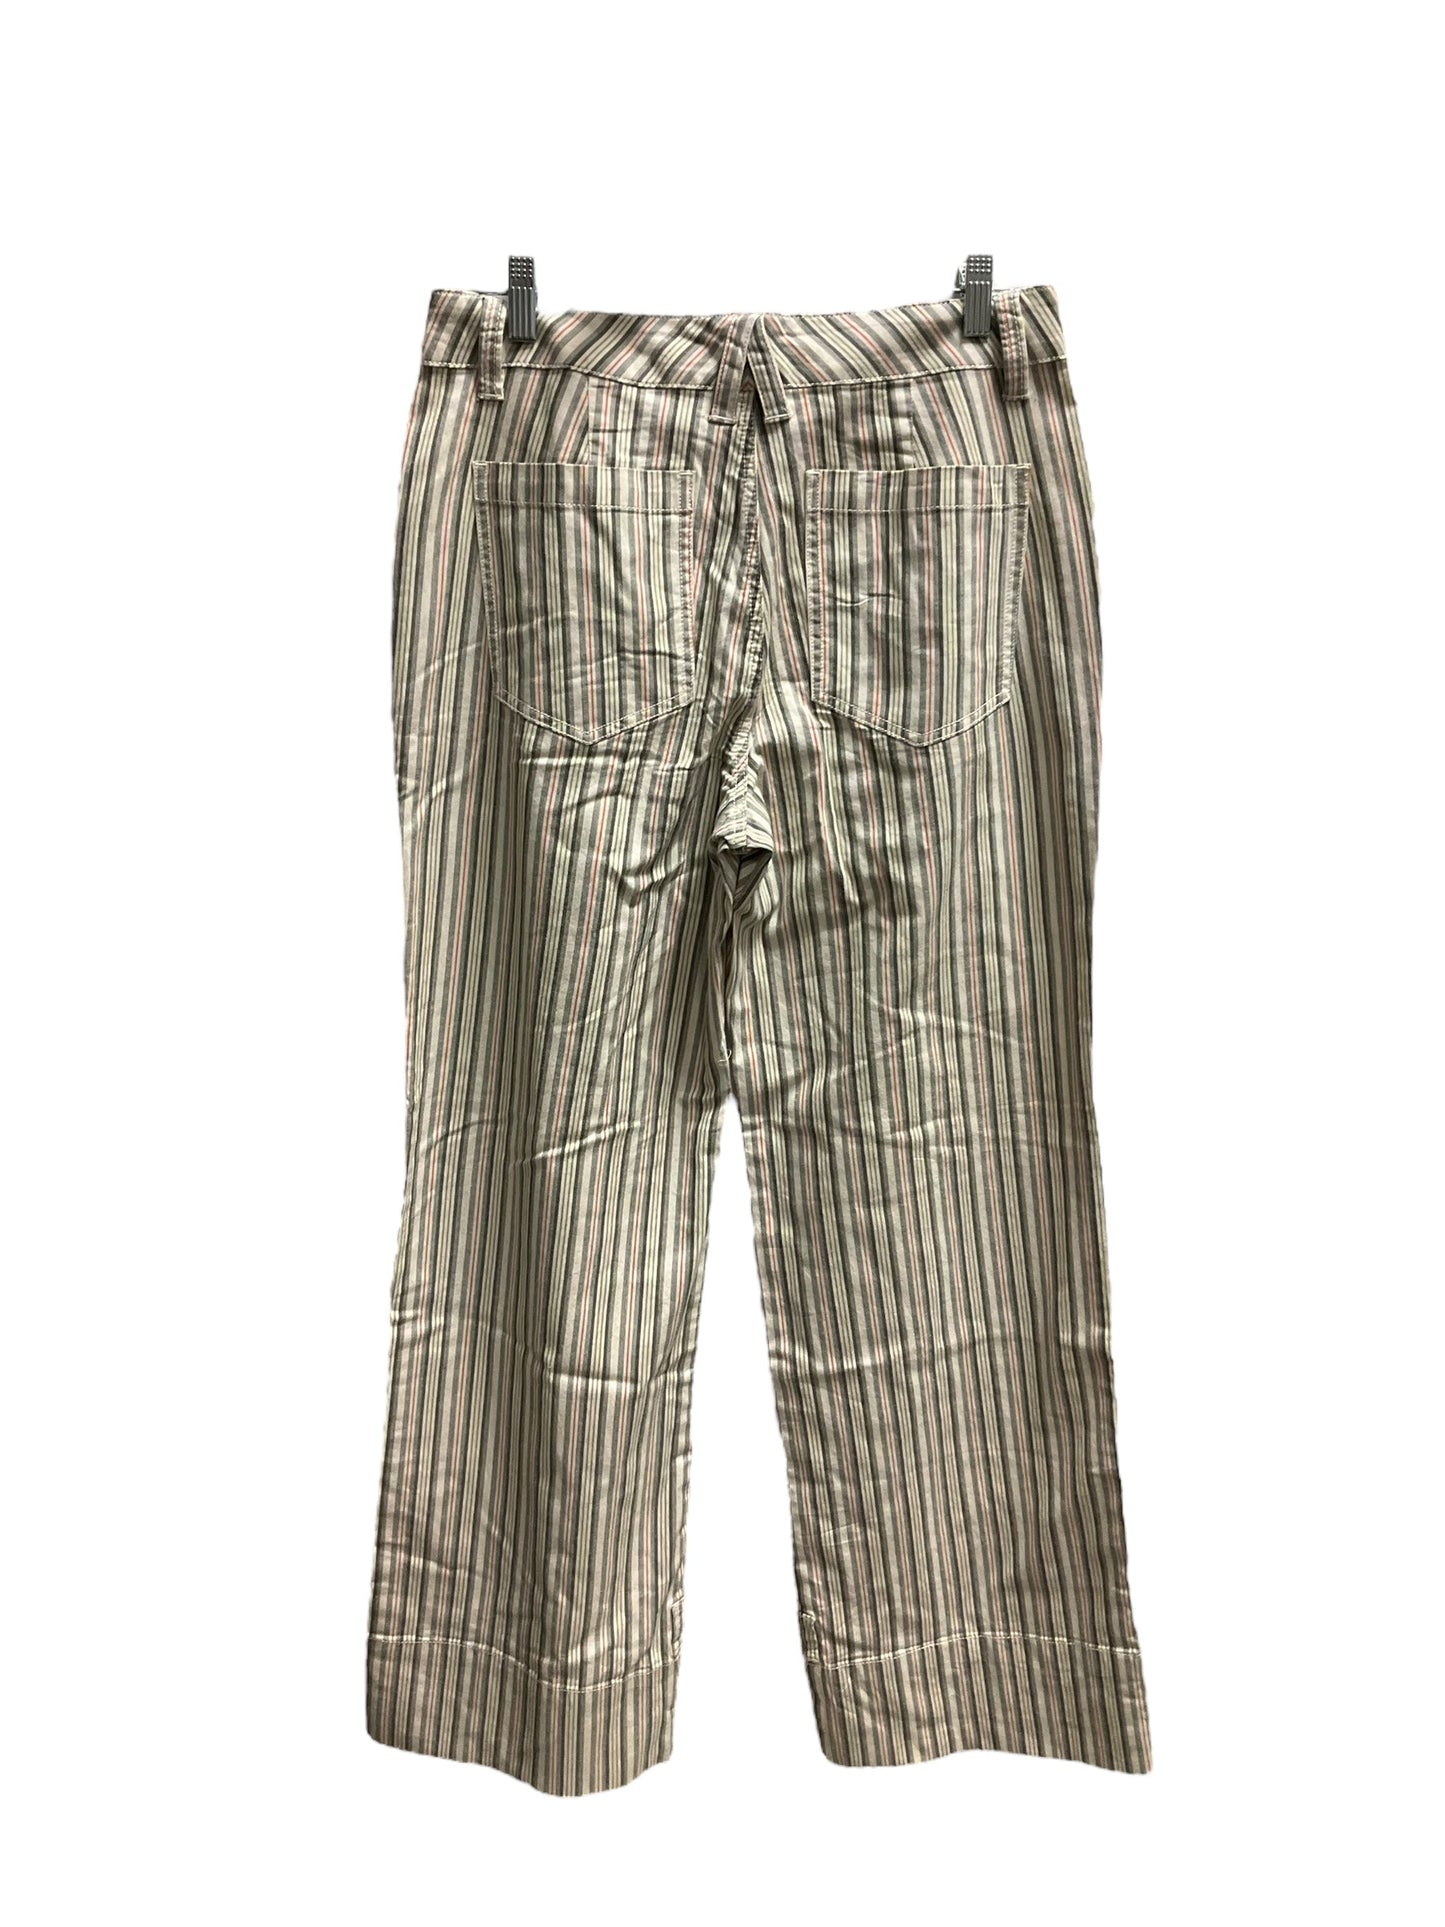 Striped Pattern Pants Other Cabi, Size 6